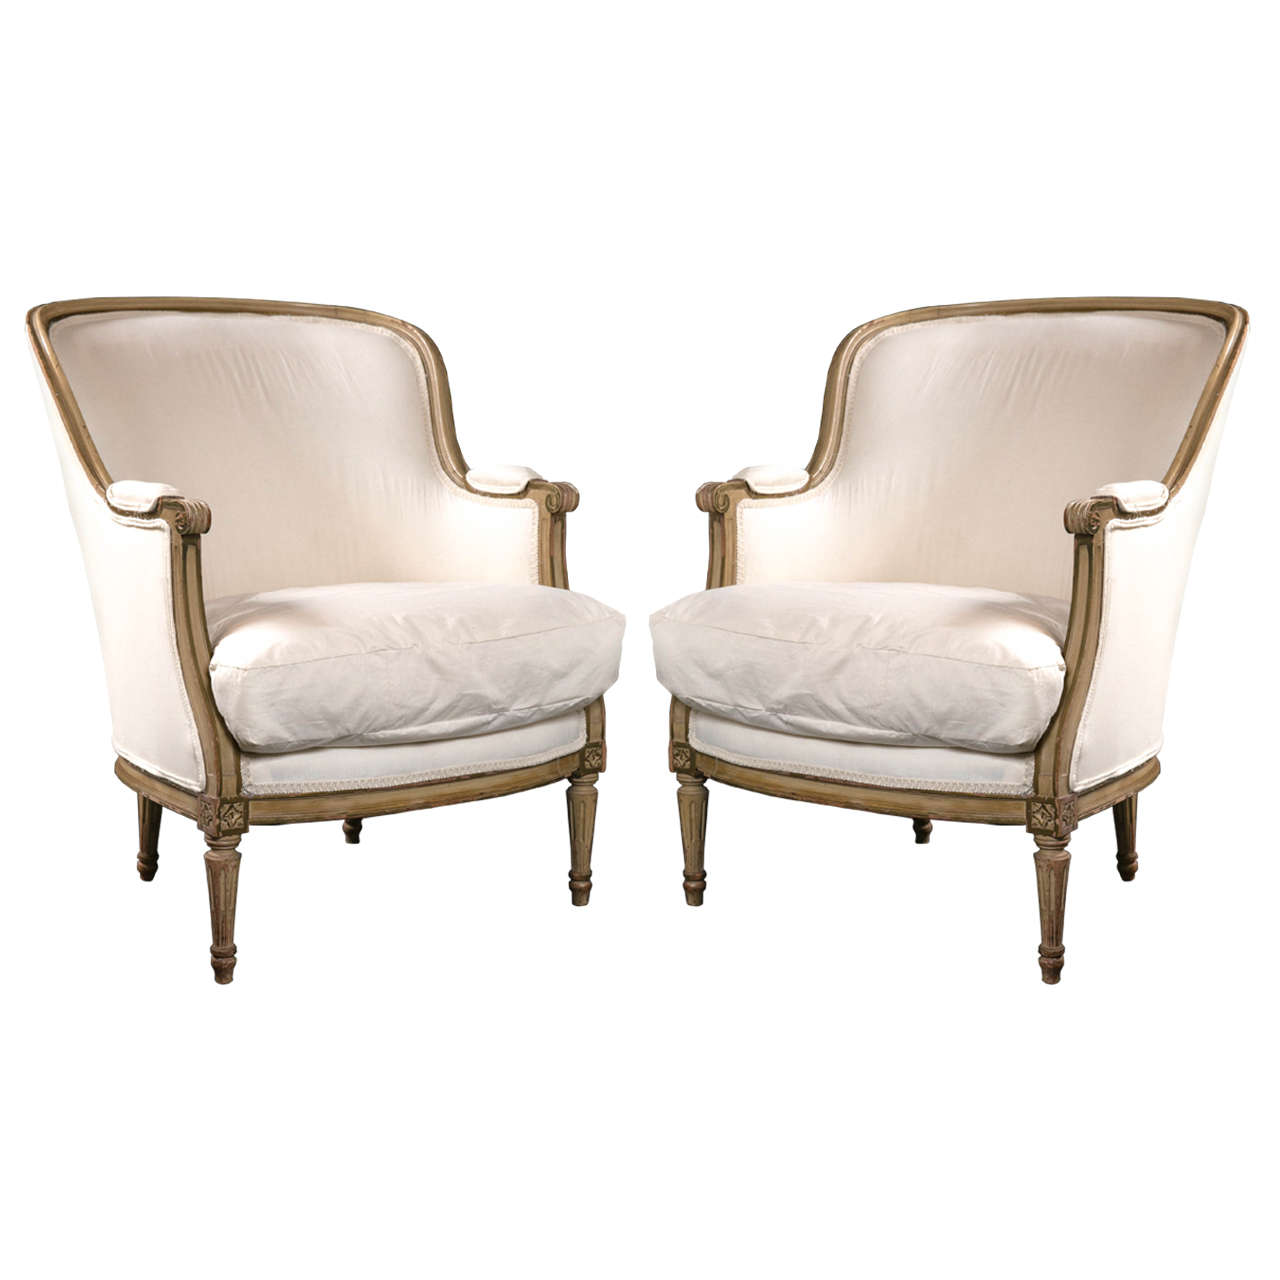 Pair of Maison Jansen Bergère Chairs in Louis XVI Style